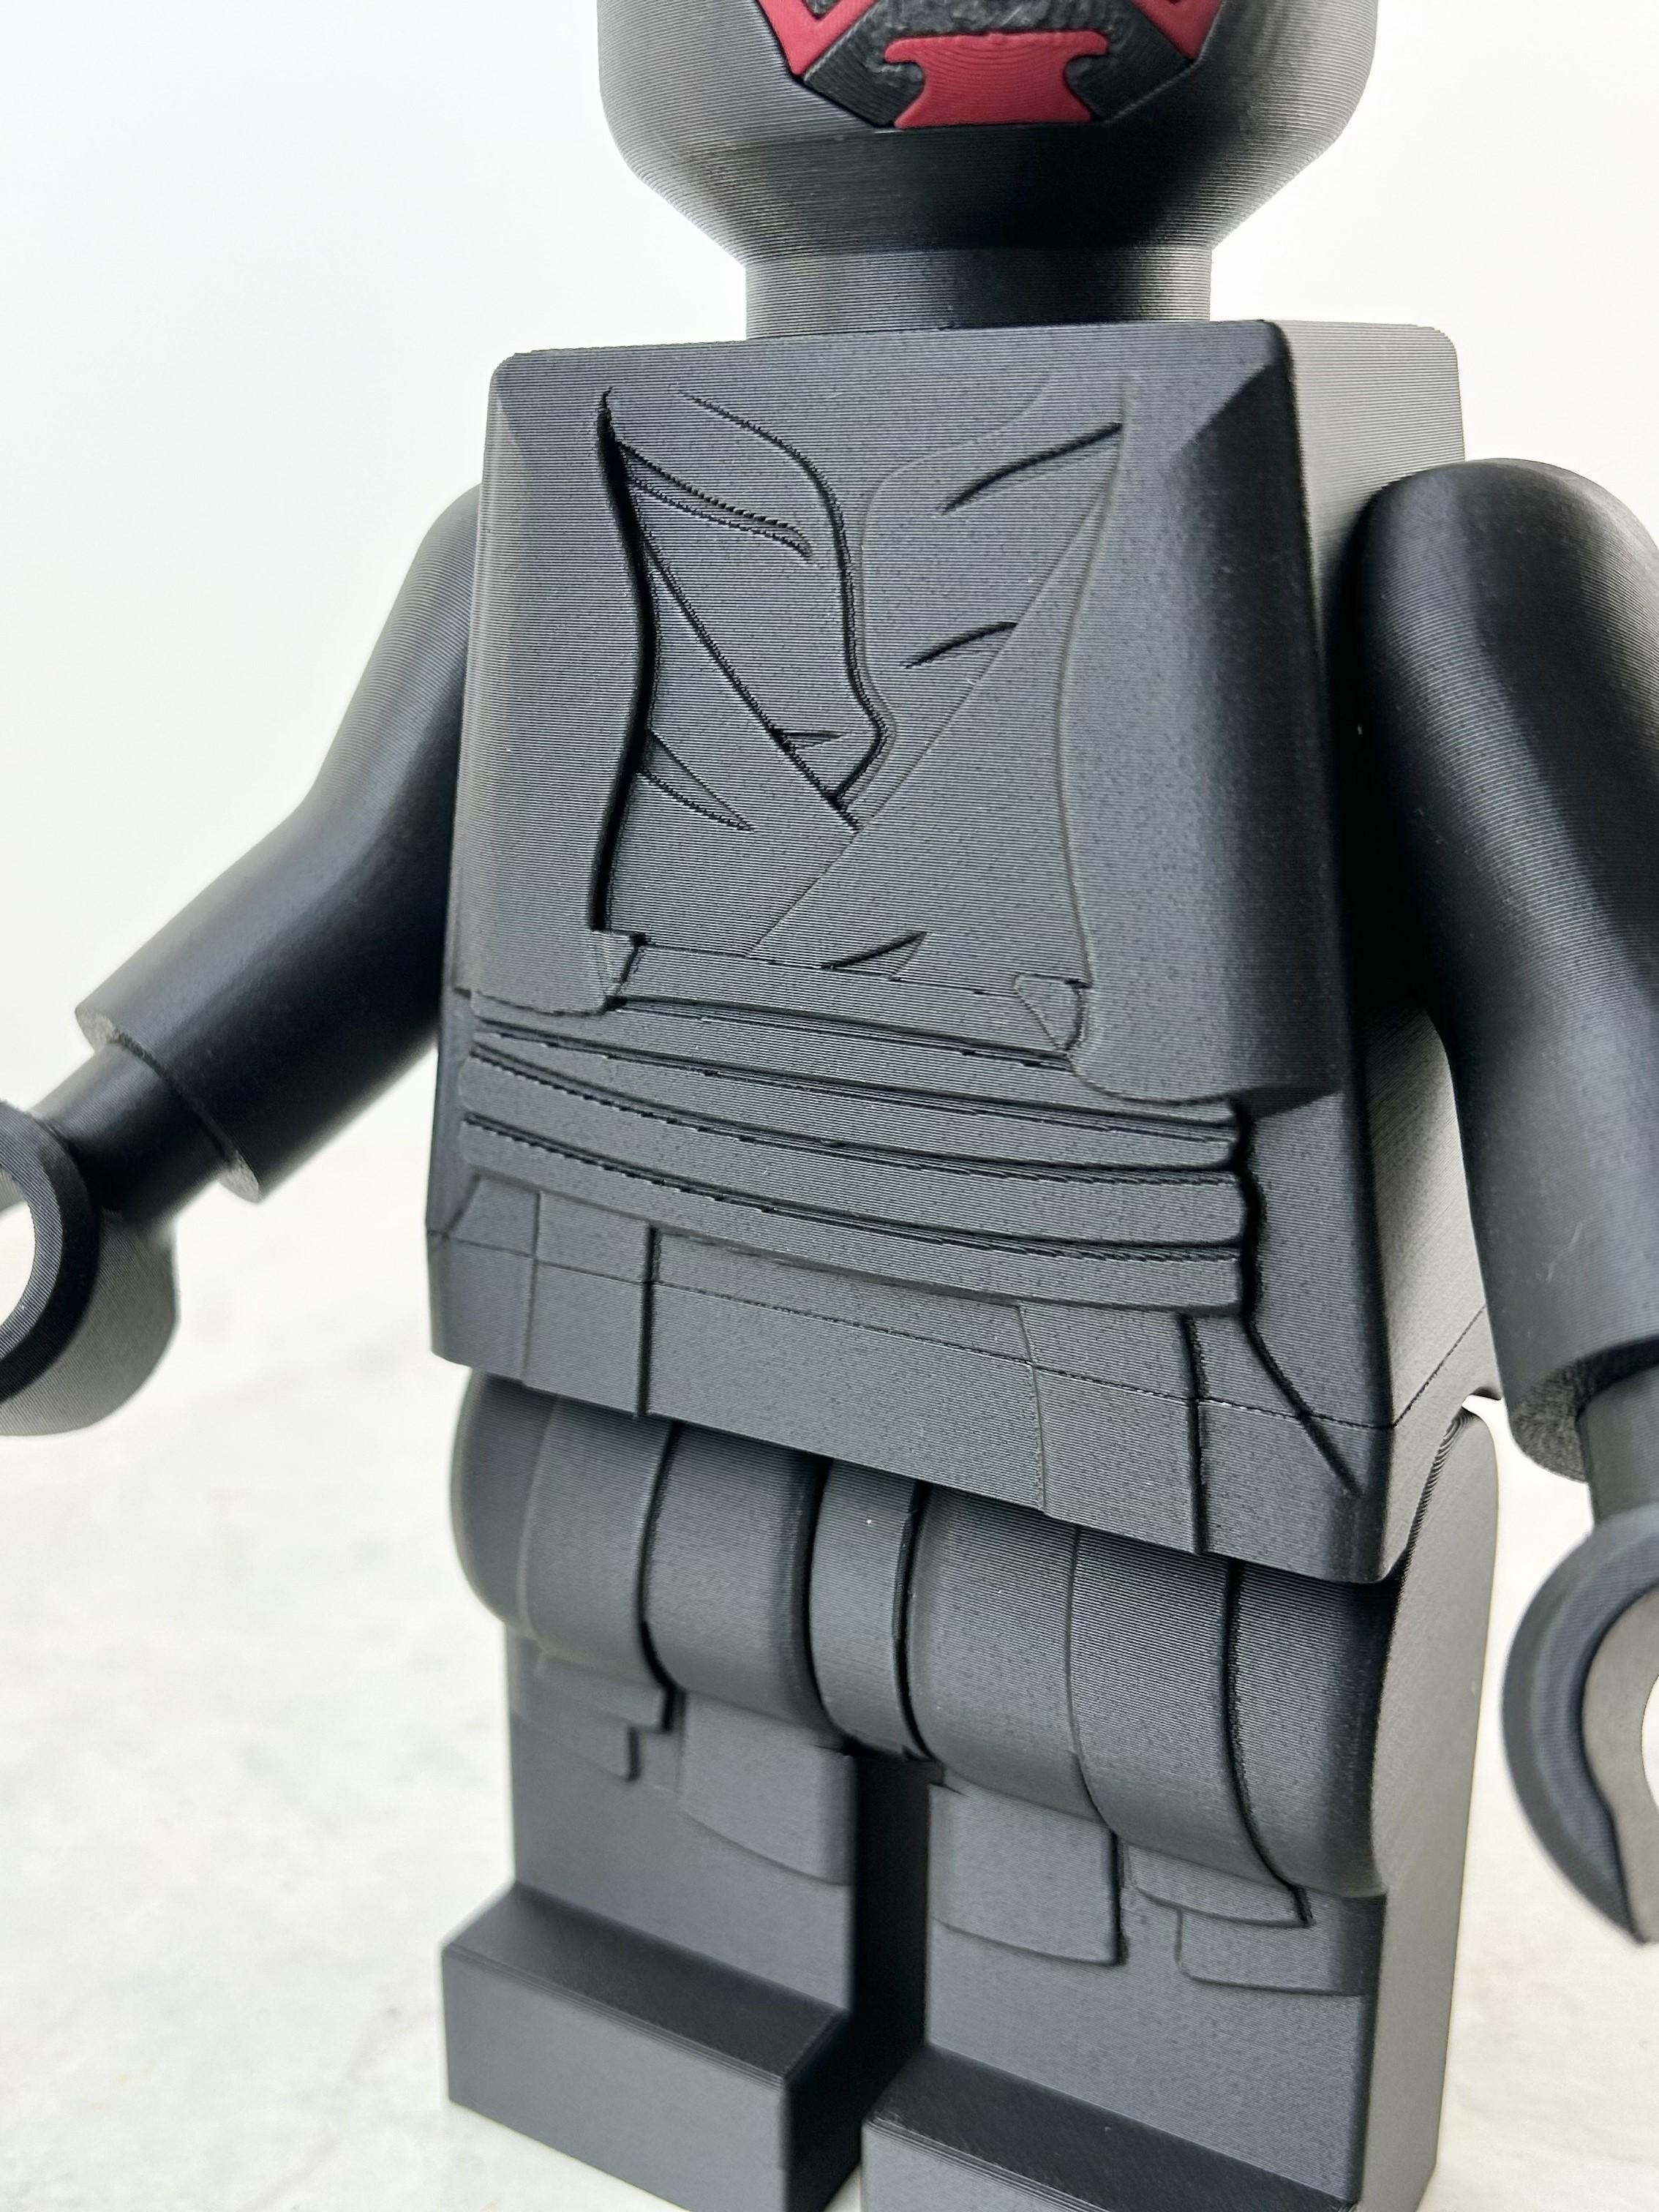 Darth Maul (9 inch brick figure, NO MMU/AMS, NO supports, NO glue) 3d model